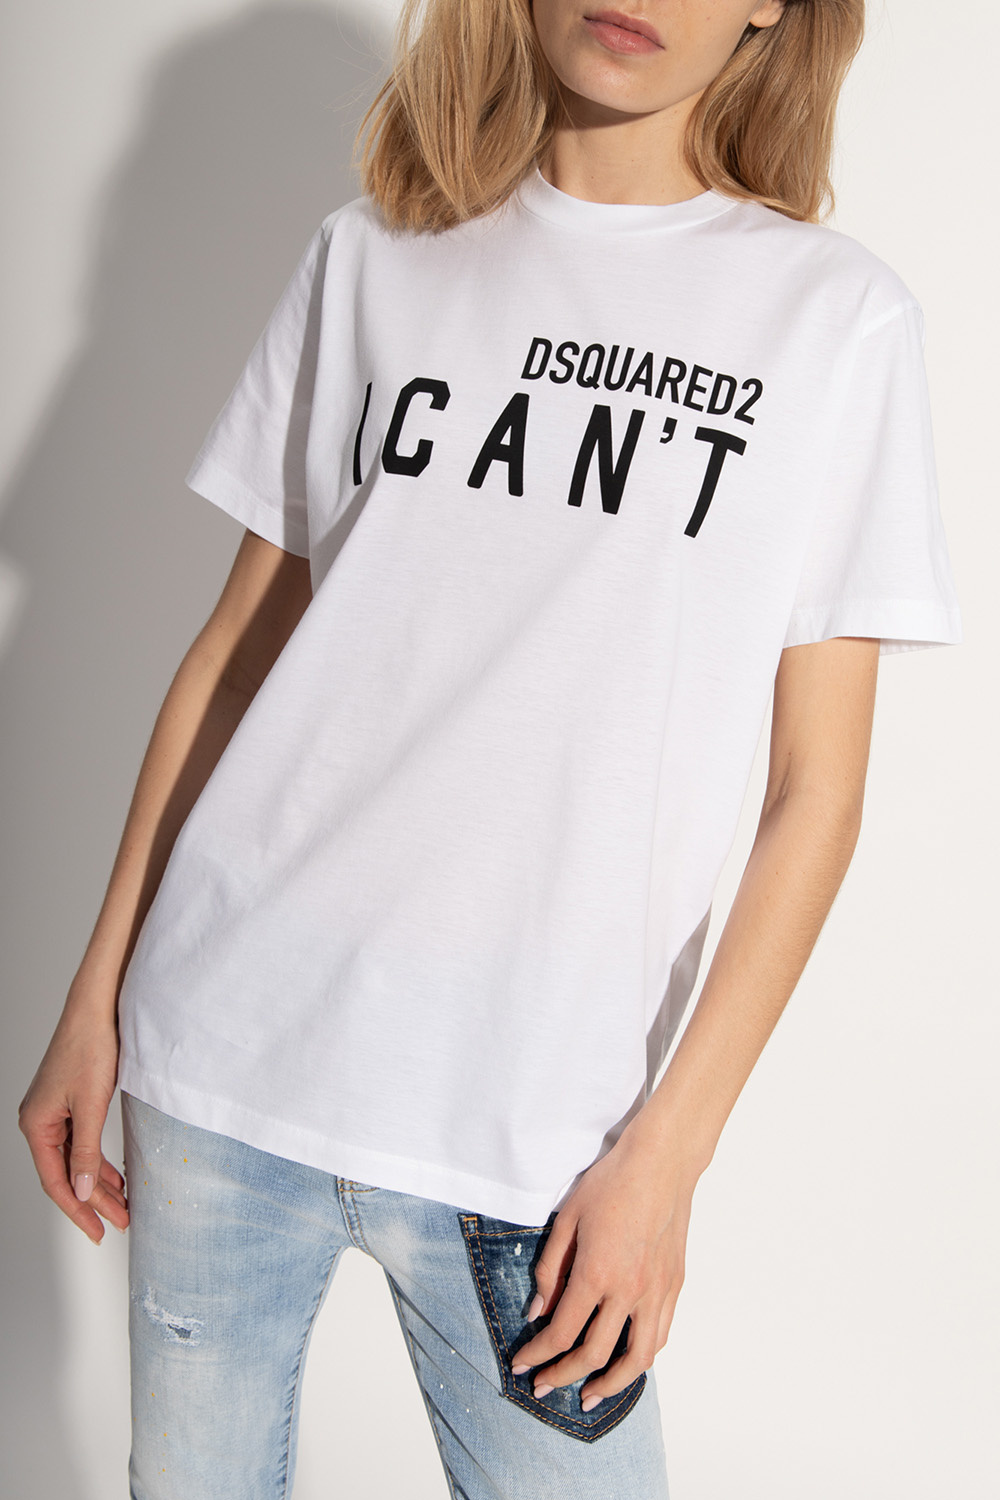 Dsquared2 GANT 2201.002202 Short sleeves shirt